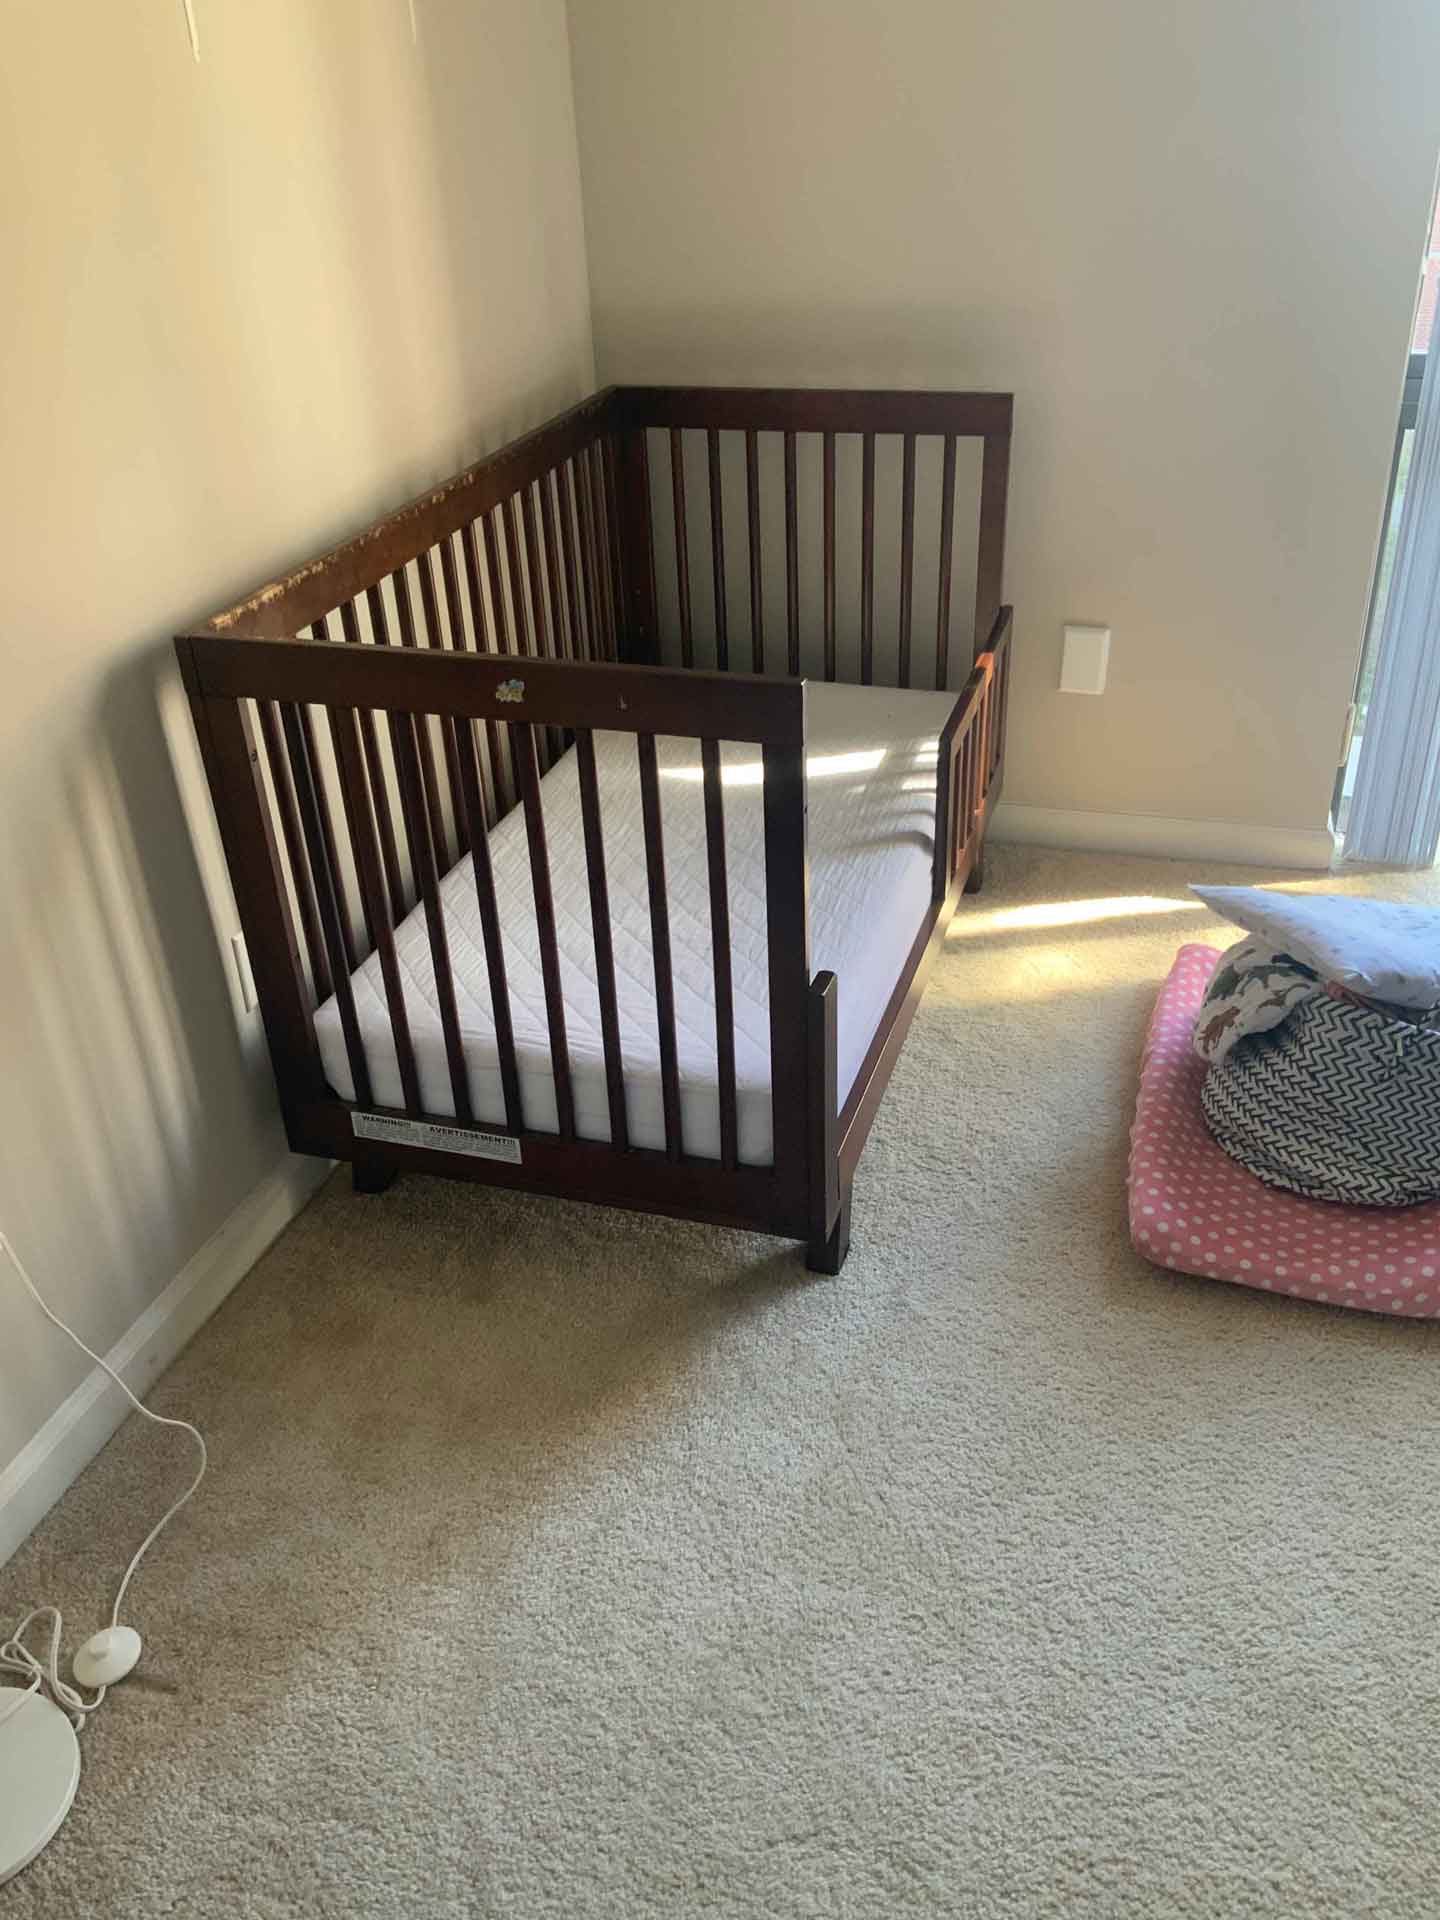 Wooden baby crib